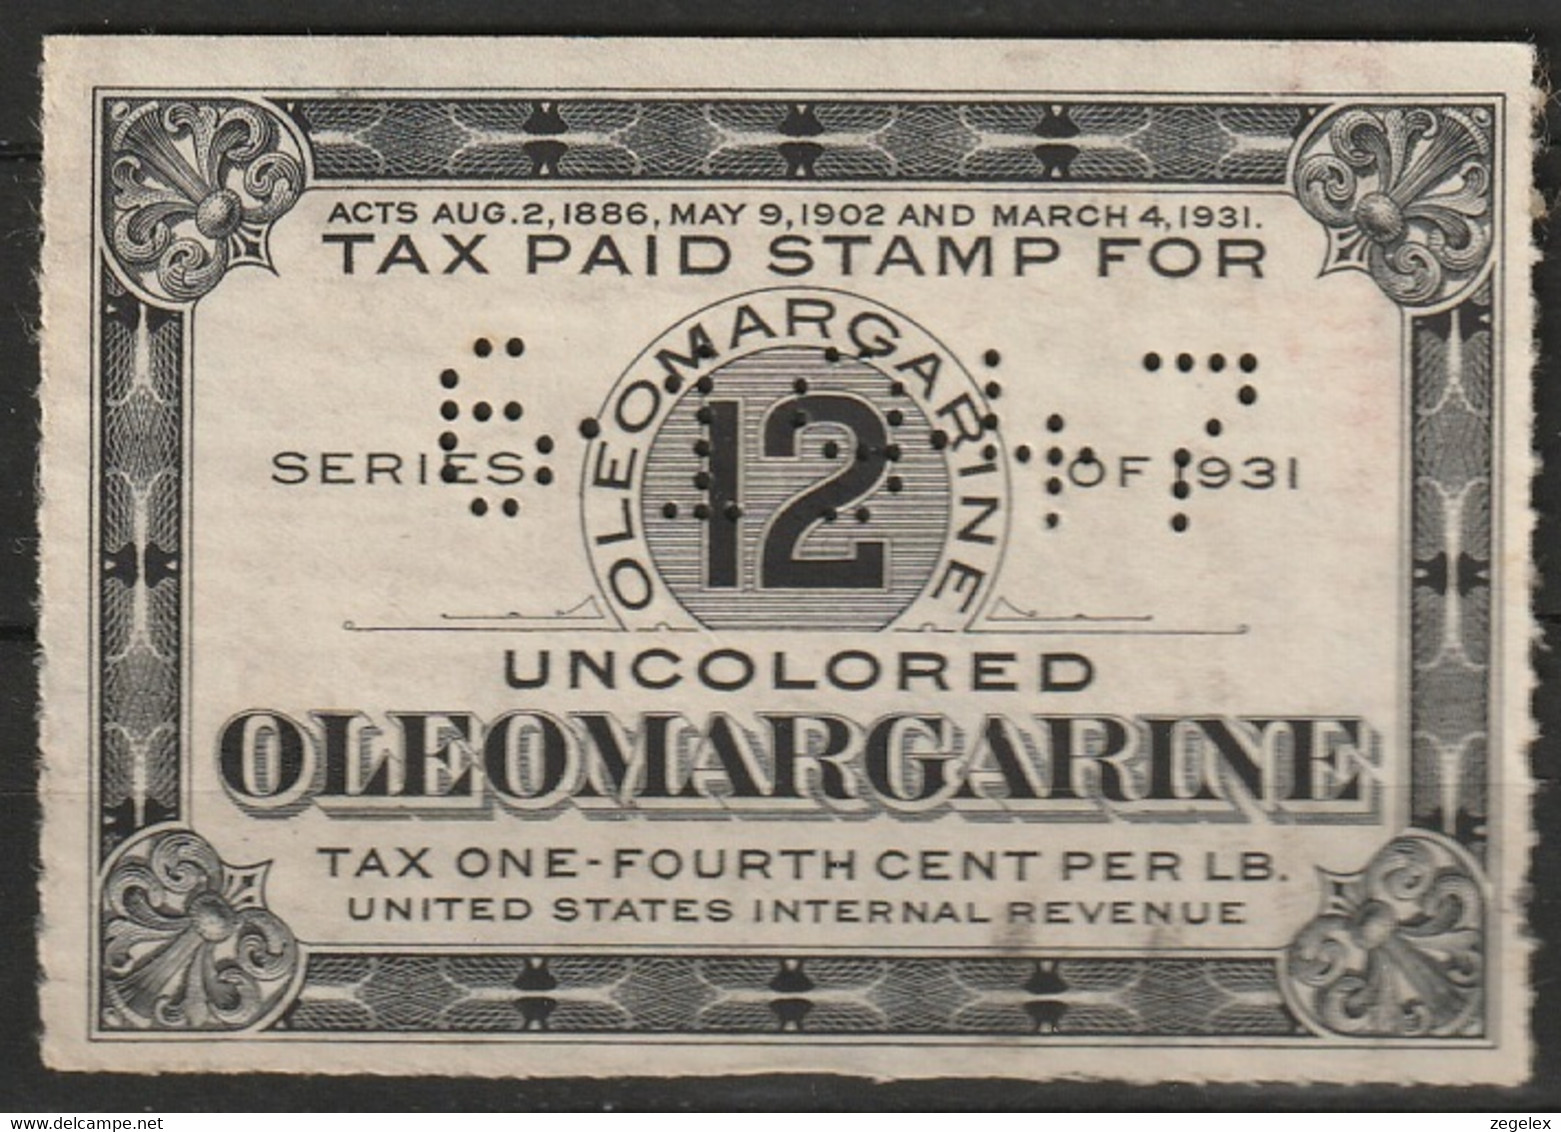 USA 1931 Oleomargarine - Series Of 1931 - 12 C - Postal Fiscals - Revenues